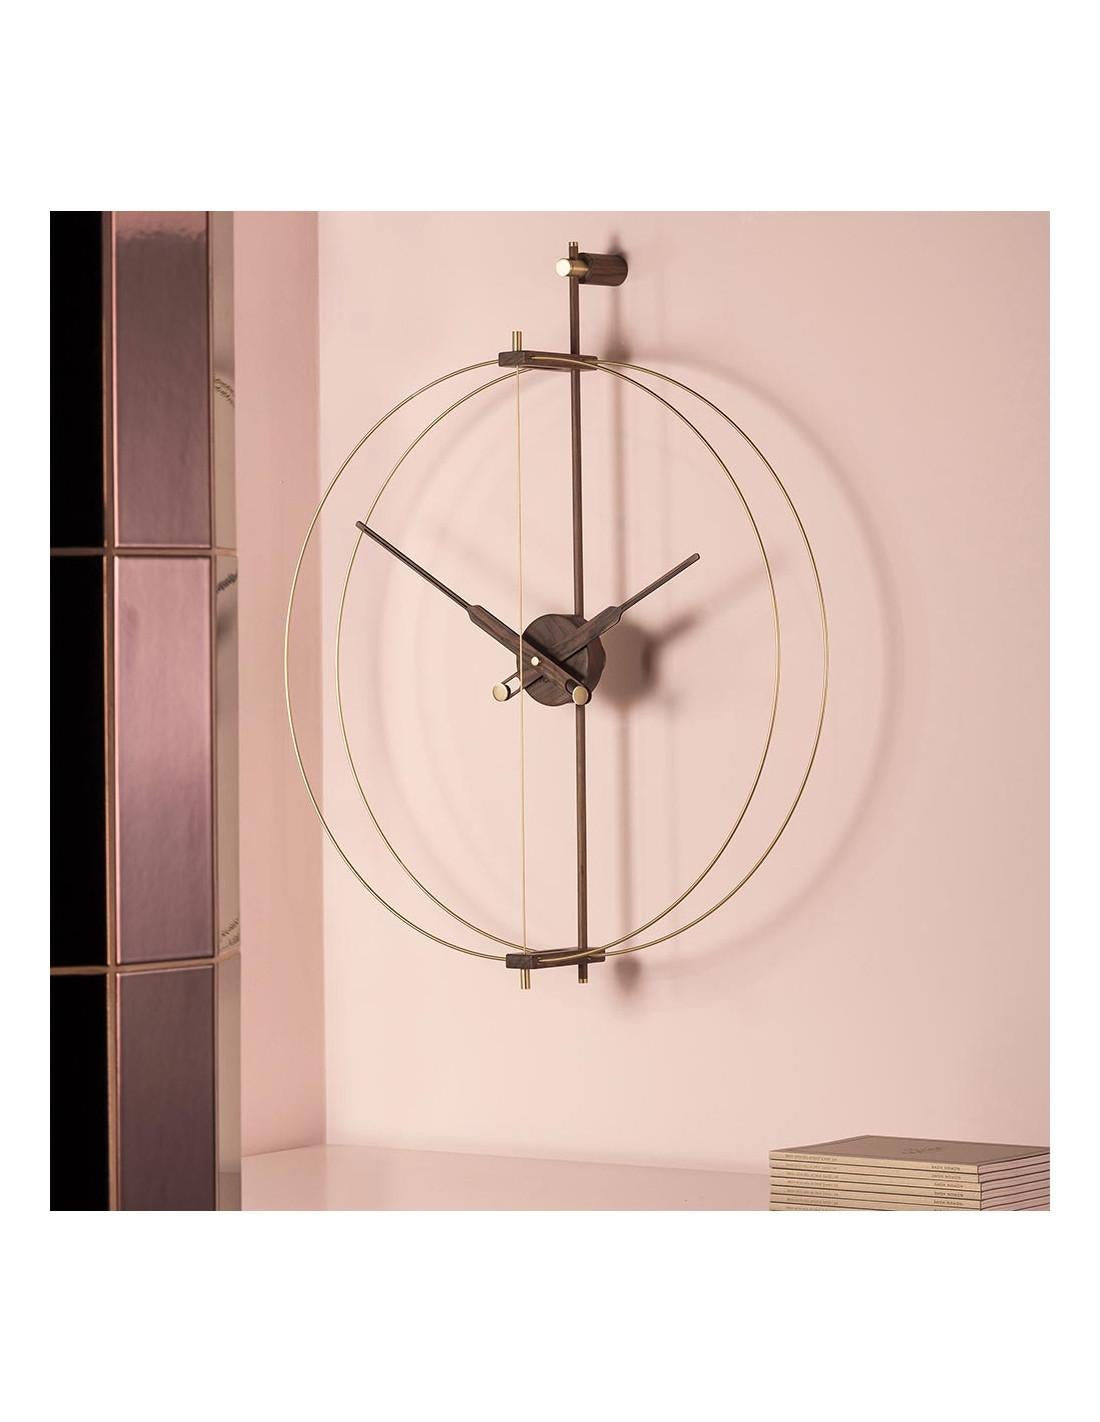 Mini Barcelona Premium Wall Clock In New Condition For Sale In New York, NY